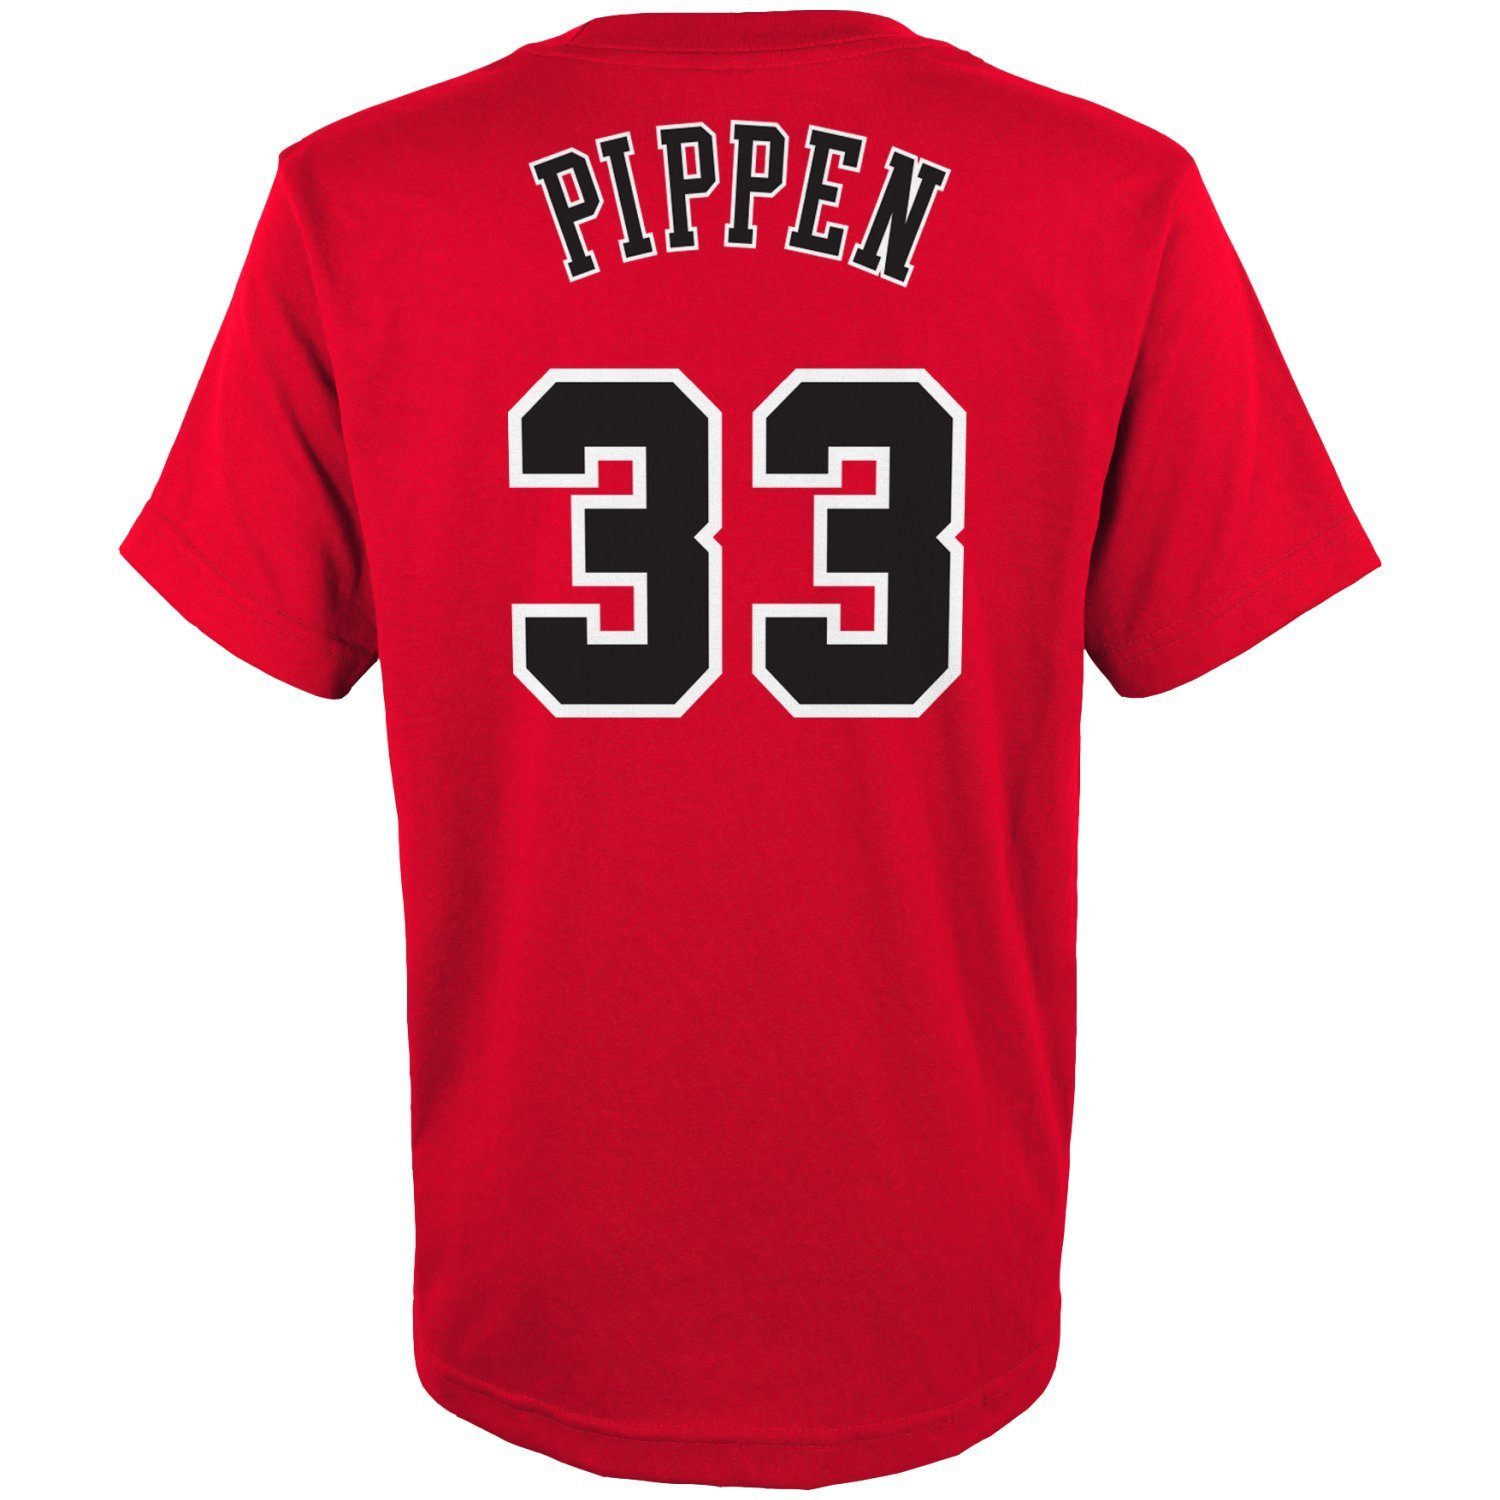 Print-Shirt Chicago Mitchell Scottie & Ness Bulls Pippen